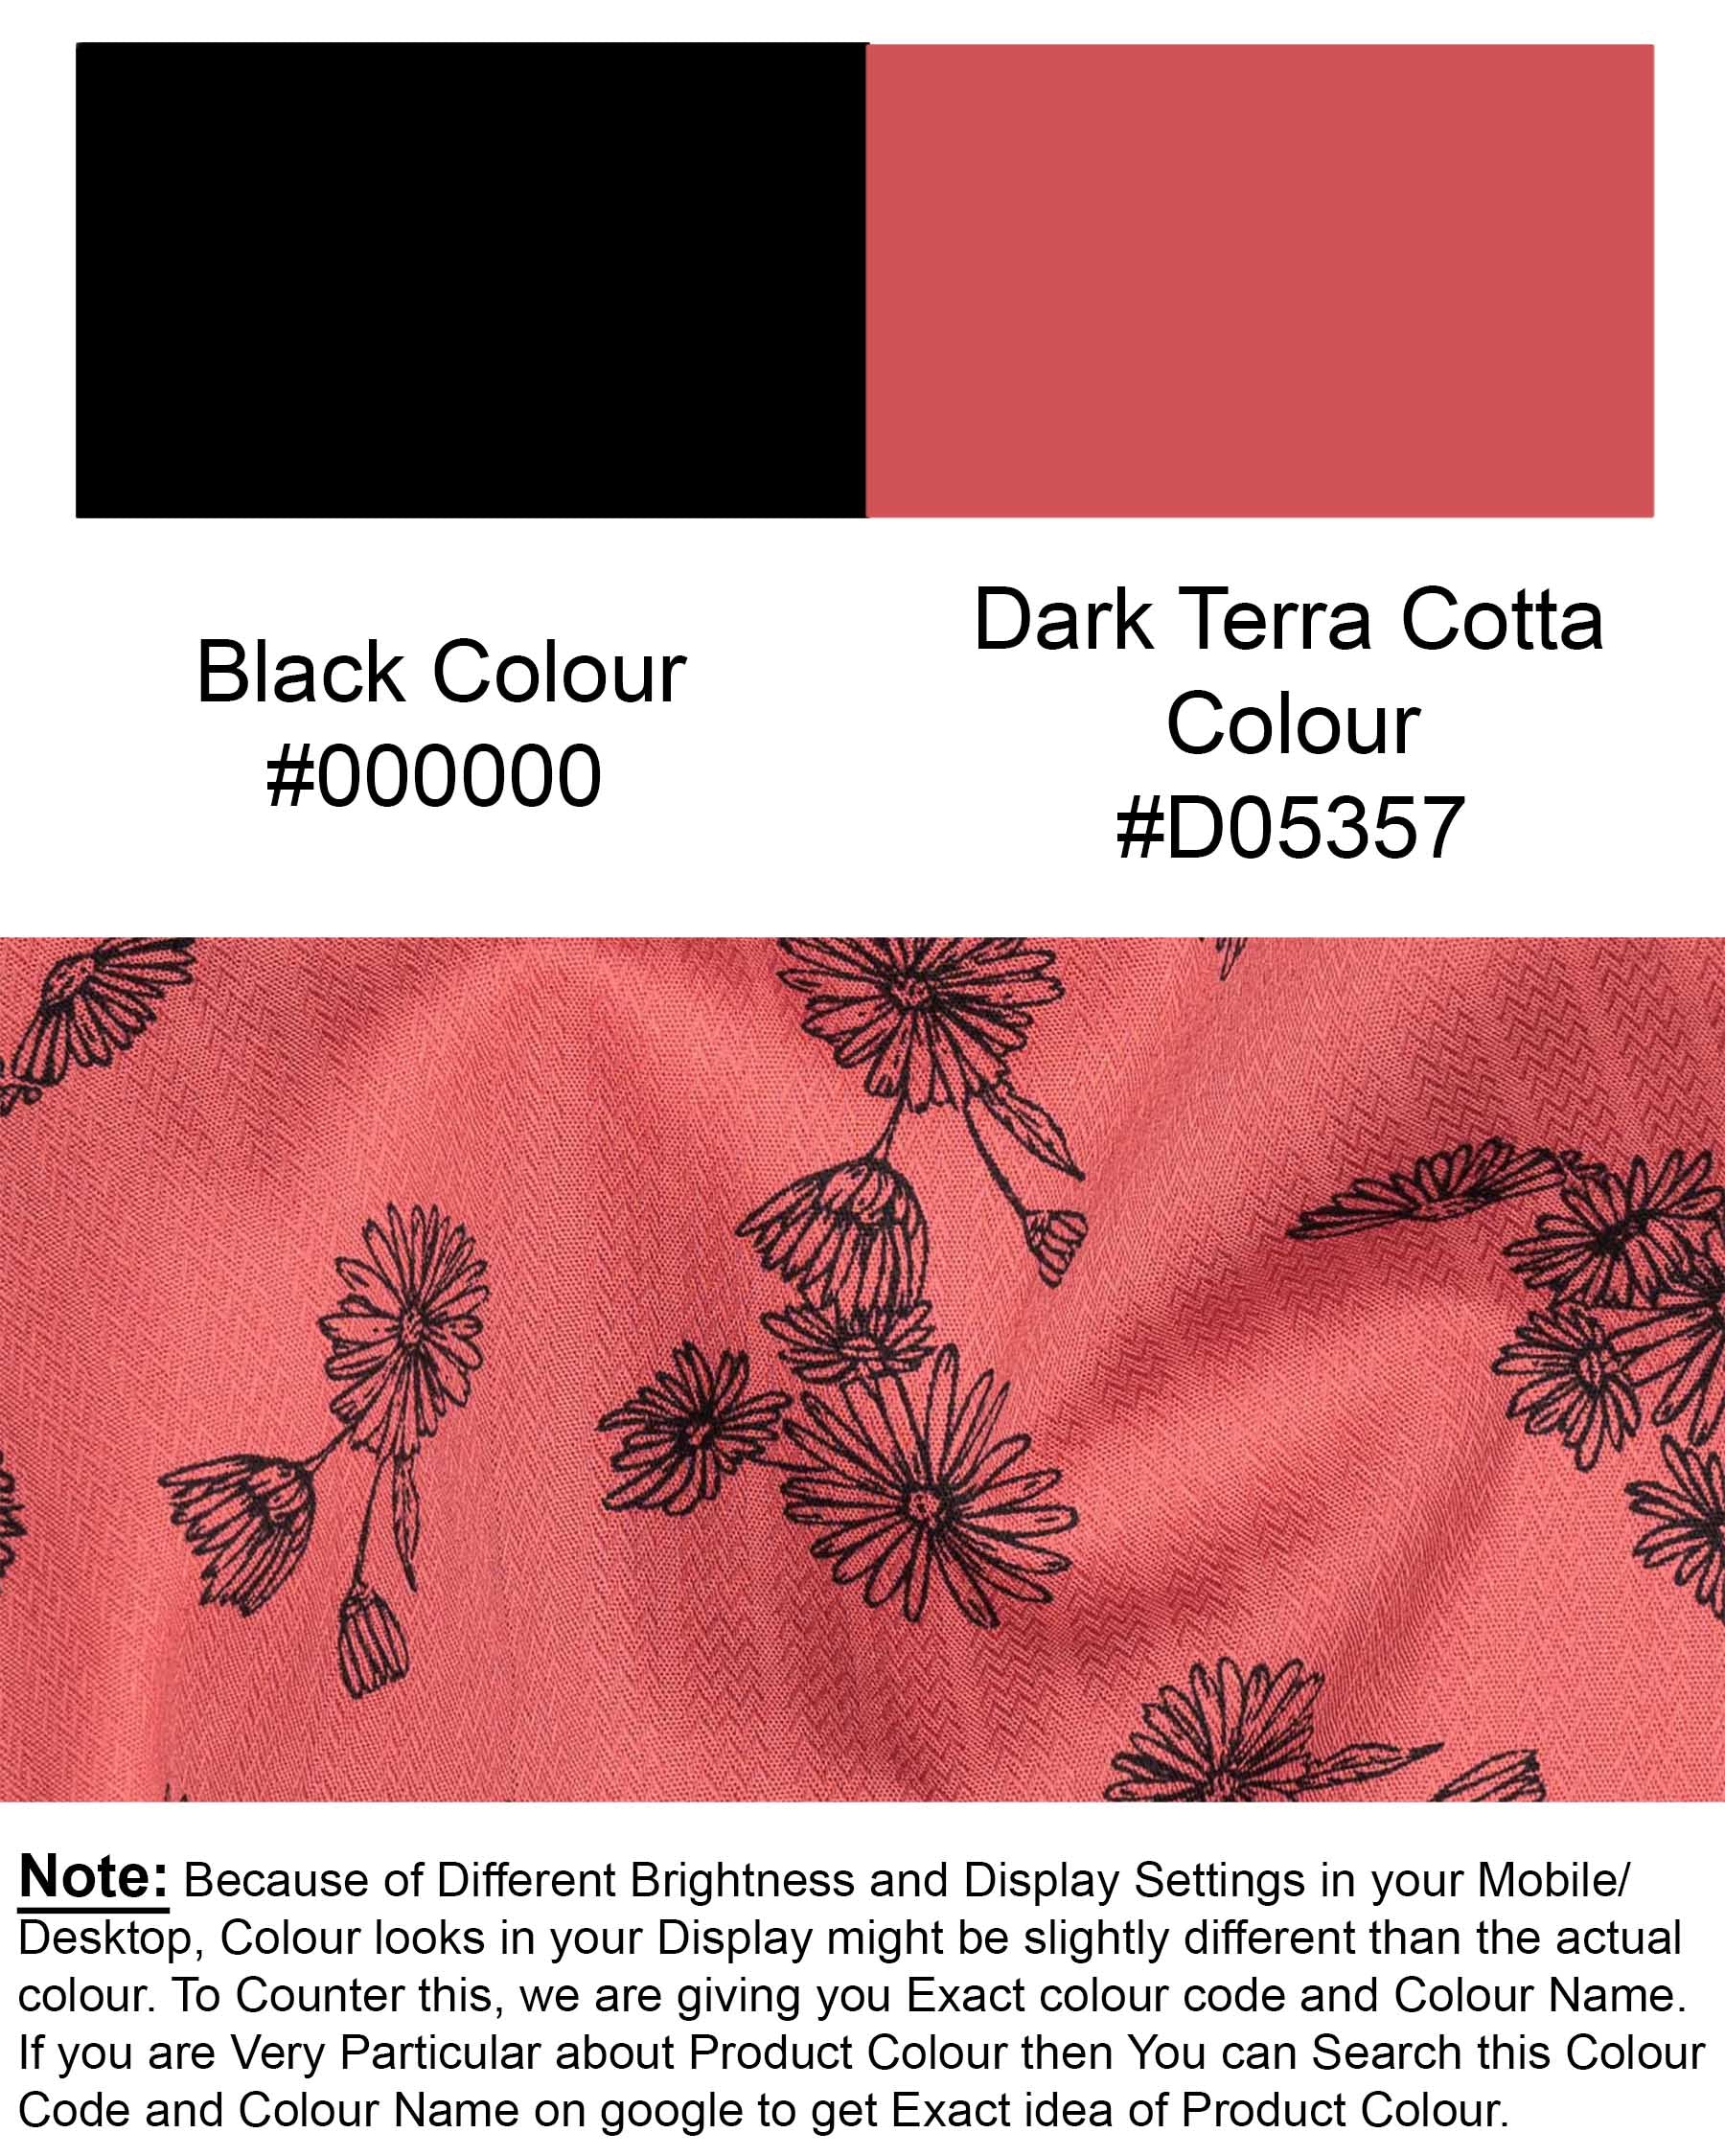 Dark Terra Cotta Floral Printed Dobby Textured Premium Giza Cotton Shirt 6402-CA-BLK-38, 6402-CA-BLK-H-38, 6402-CA-BLK-39, 6402-CA-BLK-H-39, 6402-CA-BLK-40, 6402-CA-BLK-H-40, 6402-CA-BLK-42, 6402-CA-BLK-H-42, 6402-CA-BLK-44, 6402-CA-BLK-H-44, 6402-CA-BLK-46, 6402-CA-BLK-H-46, 6402-CA-BLK-48, 6402-CA-BLK-H-48, 6402-CA-BLK-50, 6402-CA-BLK-H-50, 6402-CA-BLK-52, 6402-CA-BLK-H-52